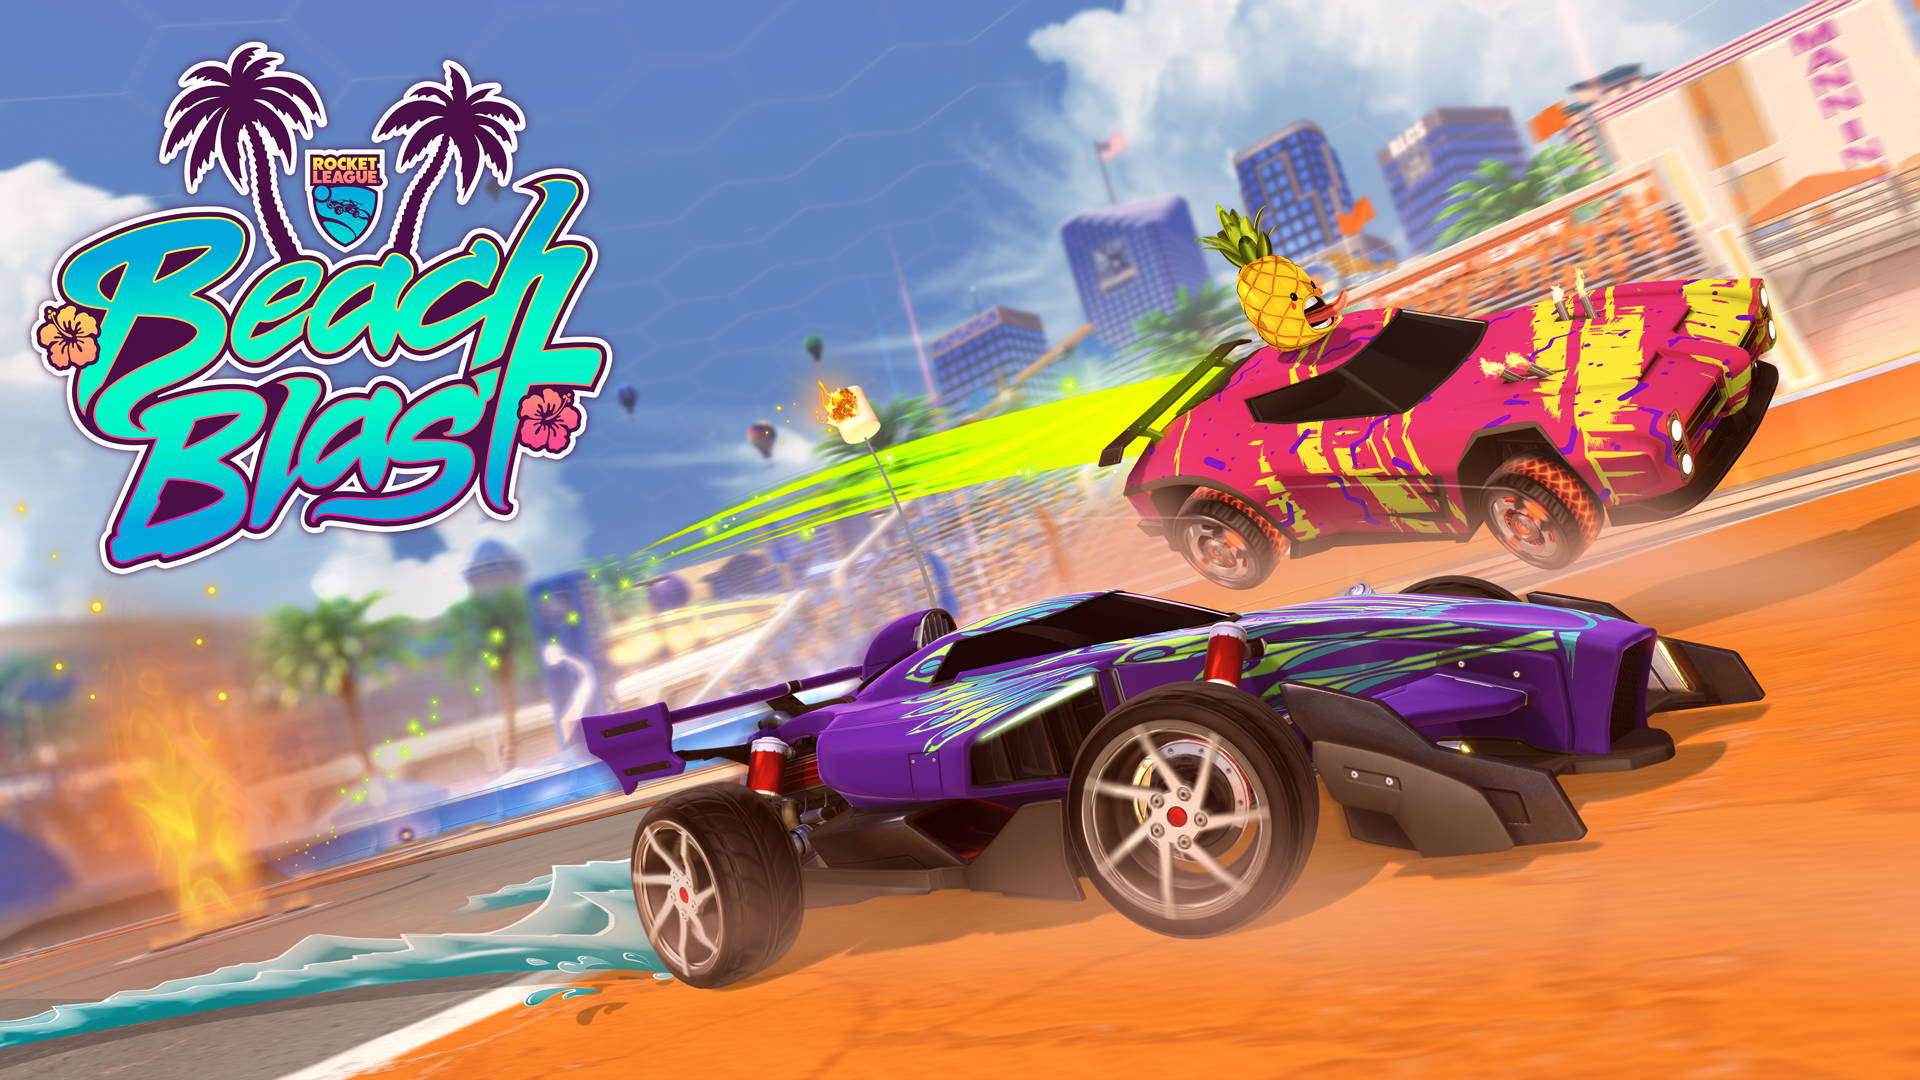 Rocket League Beach Blast Poster